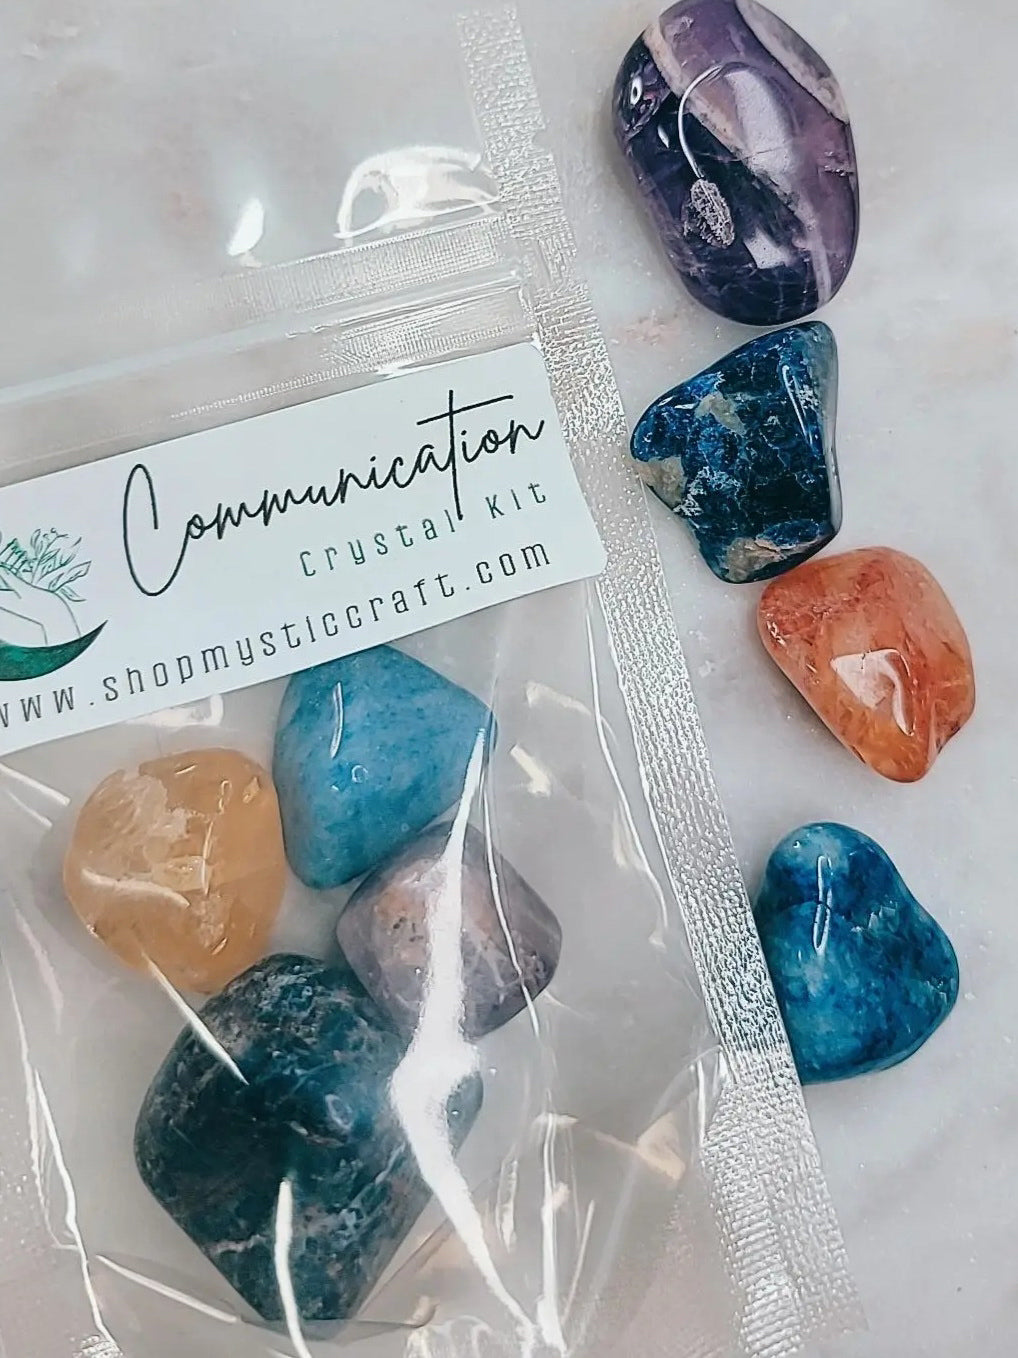 Communication Crystal Kit